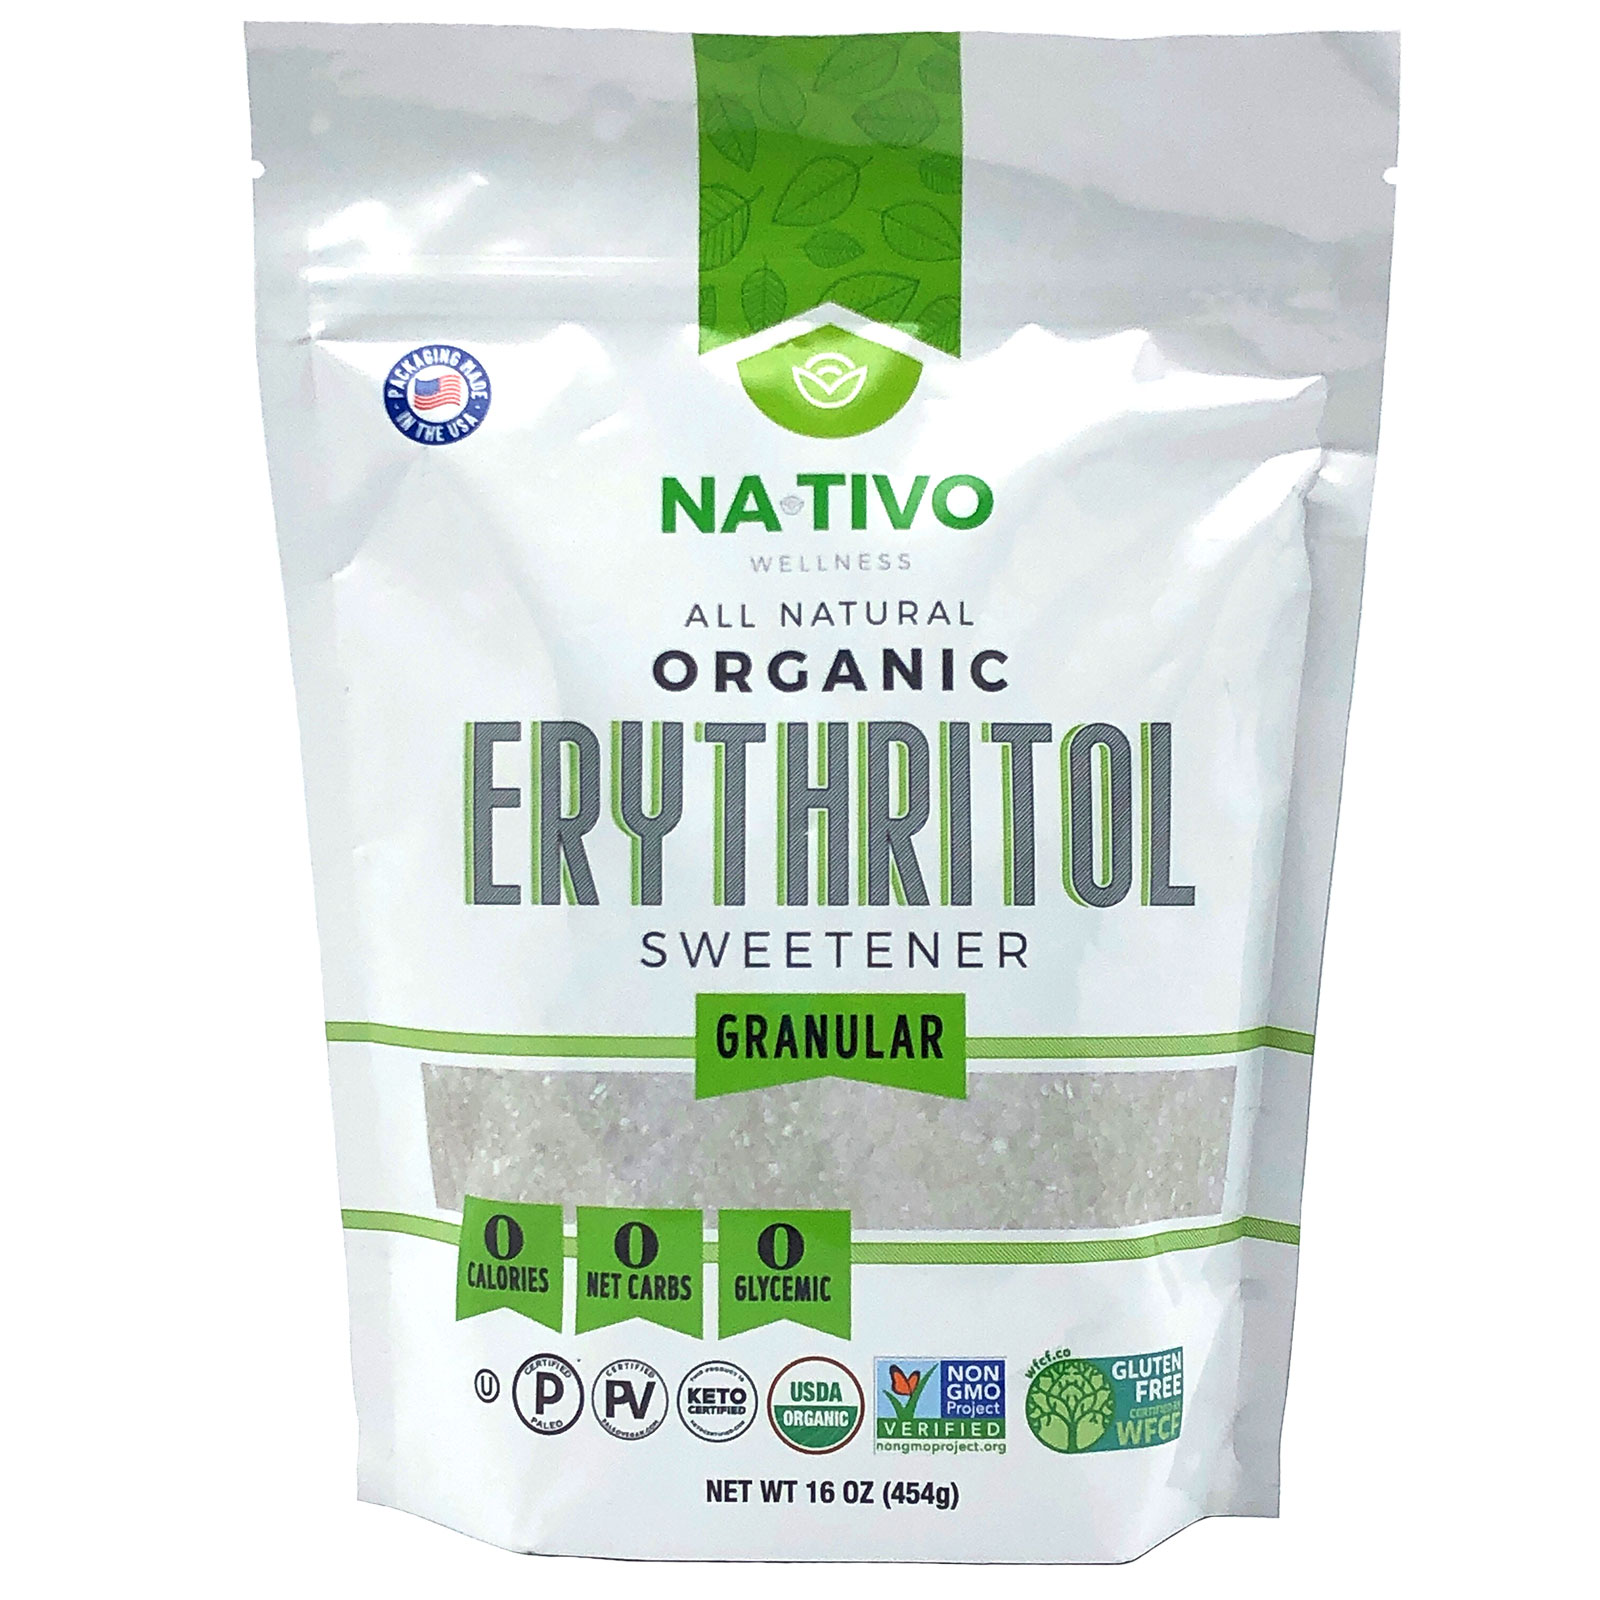 NaTivo All Natural Organic Erythritol Sweetener Granular 12 units per case 1.0 lb